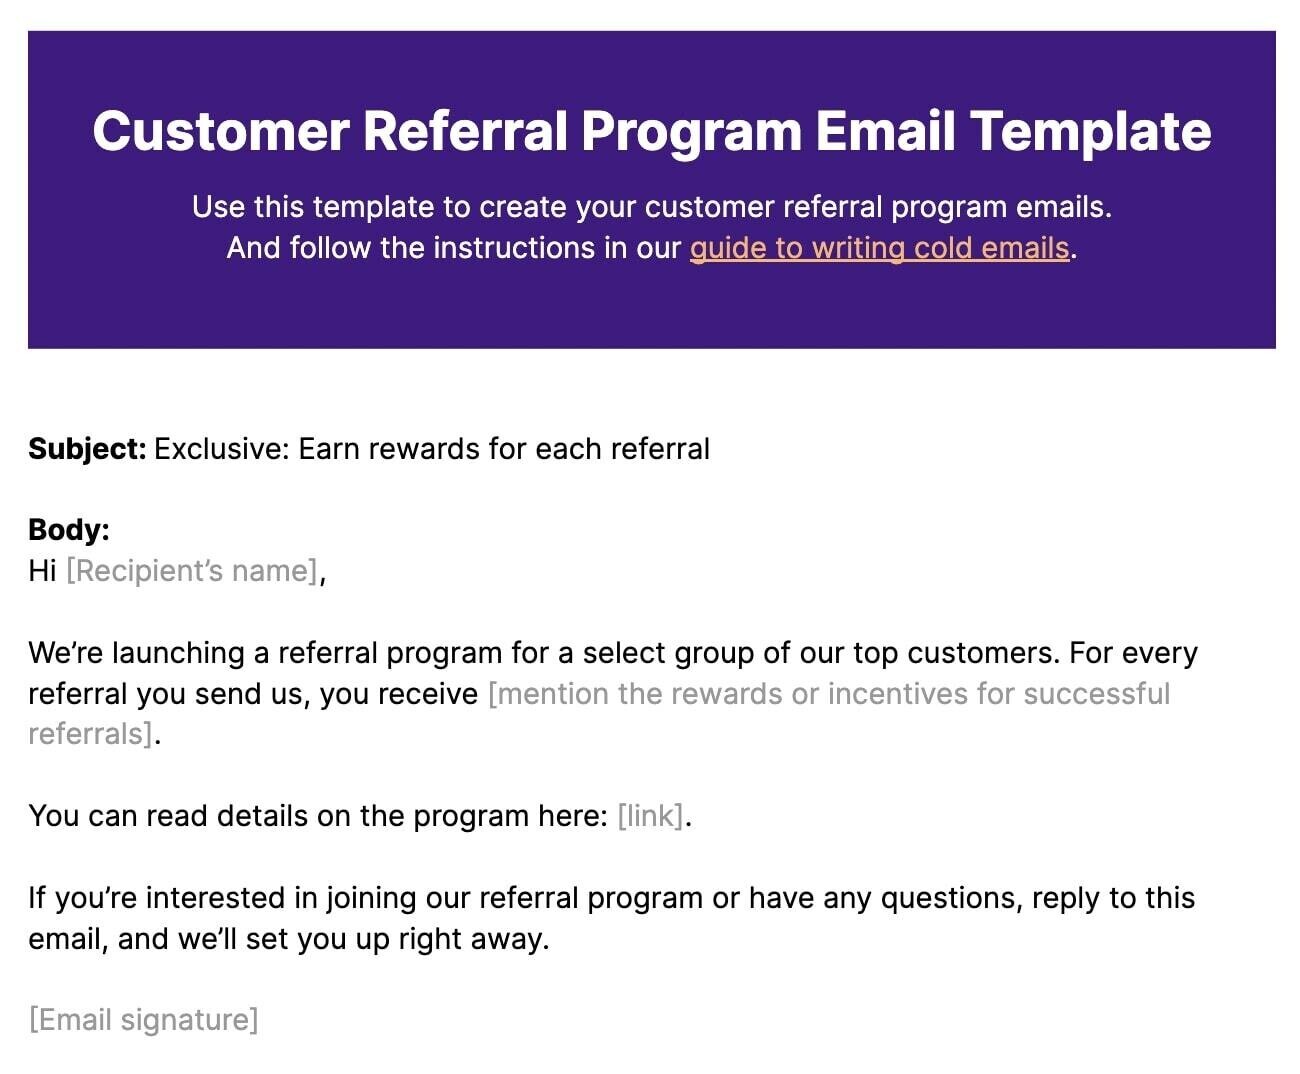 Customer Referral Program Email Template